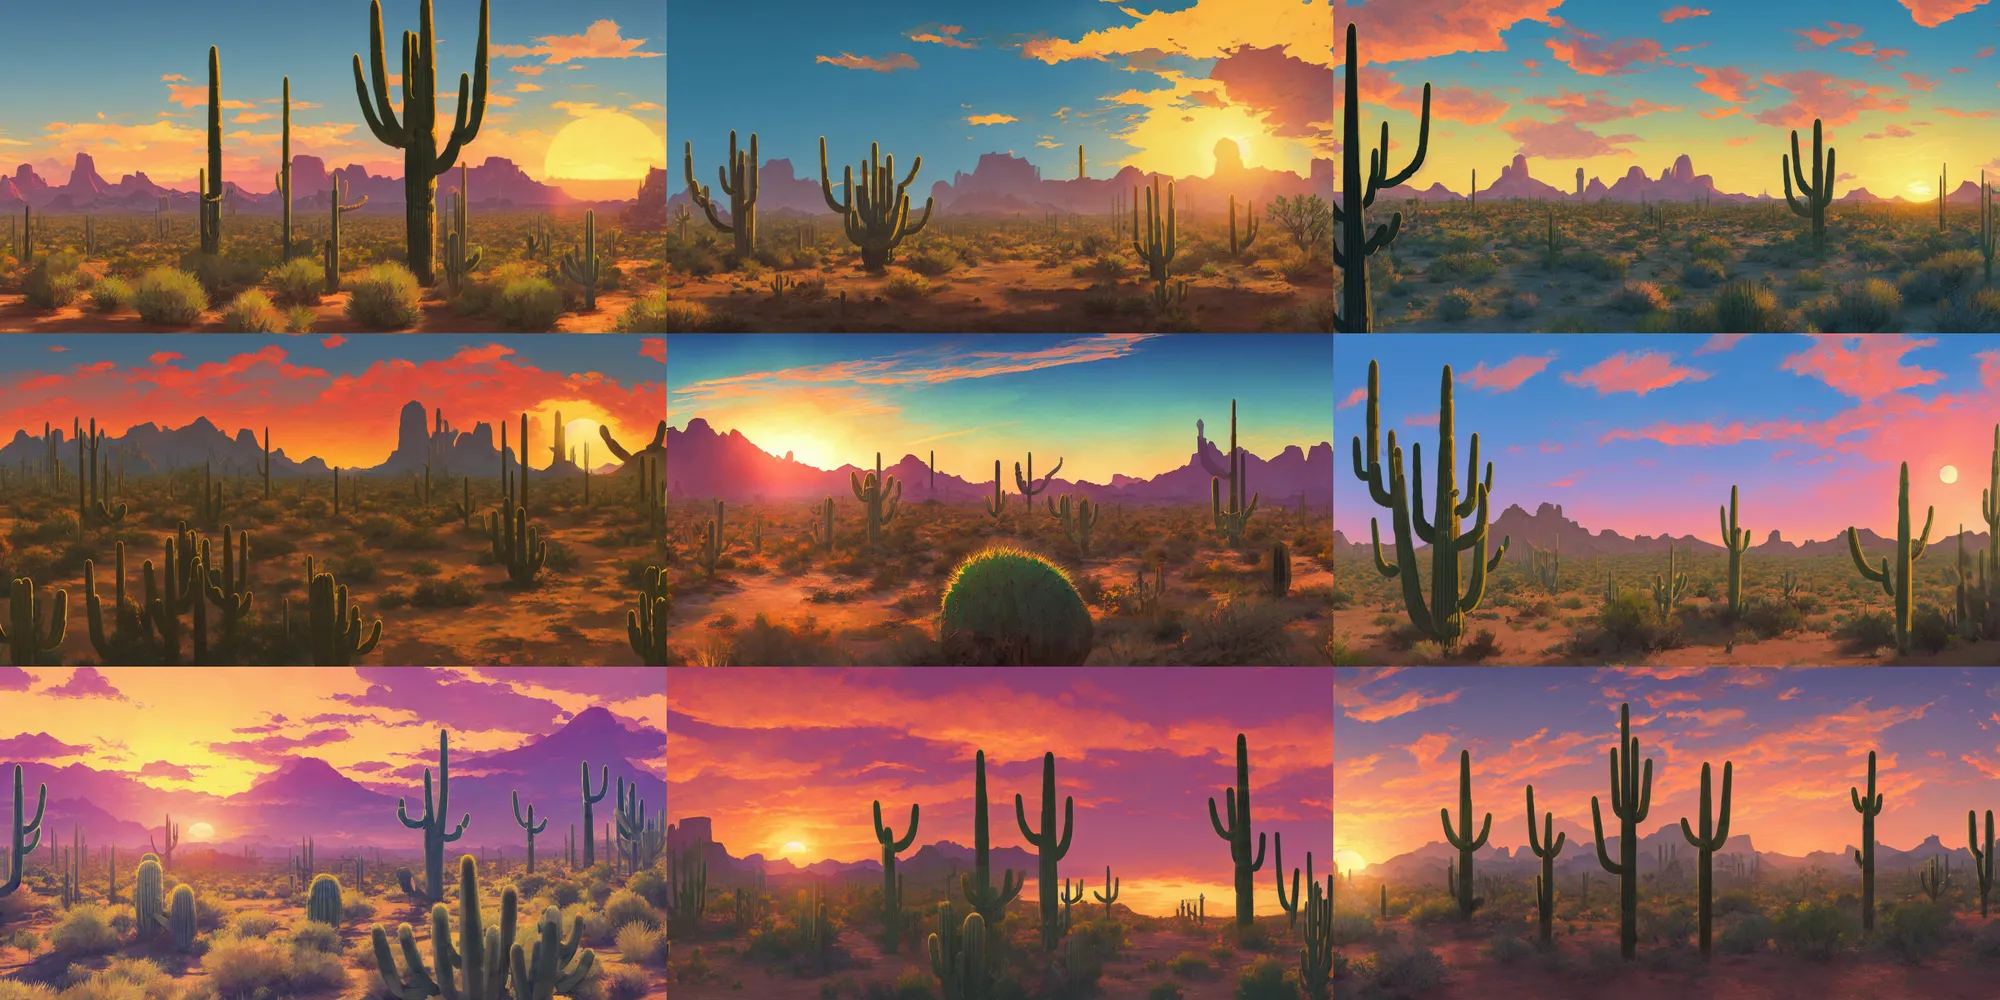 Prompt: Arizona desert sunset, Sonora desert, matte painting, tall saguaro cactuses, Makoto Shinkai, breath of the wild, Nausicaa Ghibli, sun in background